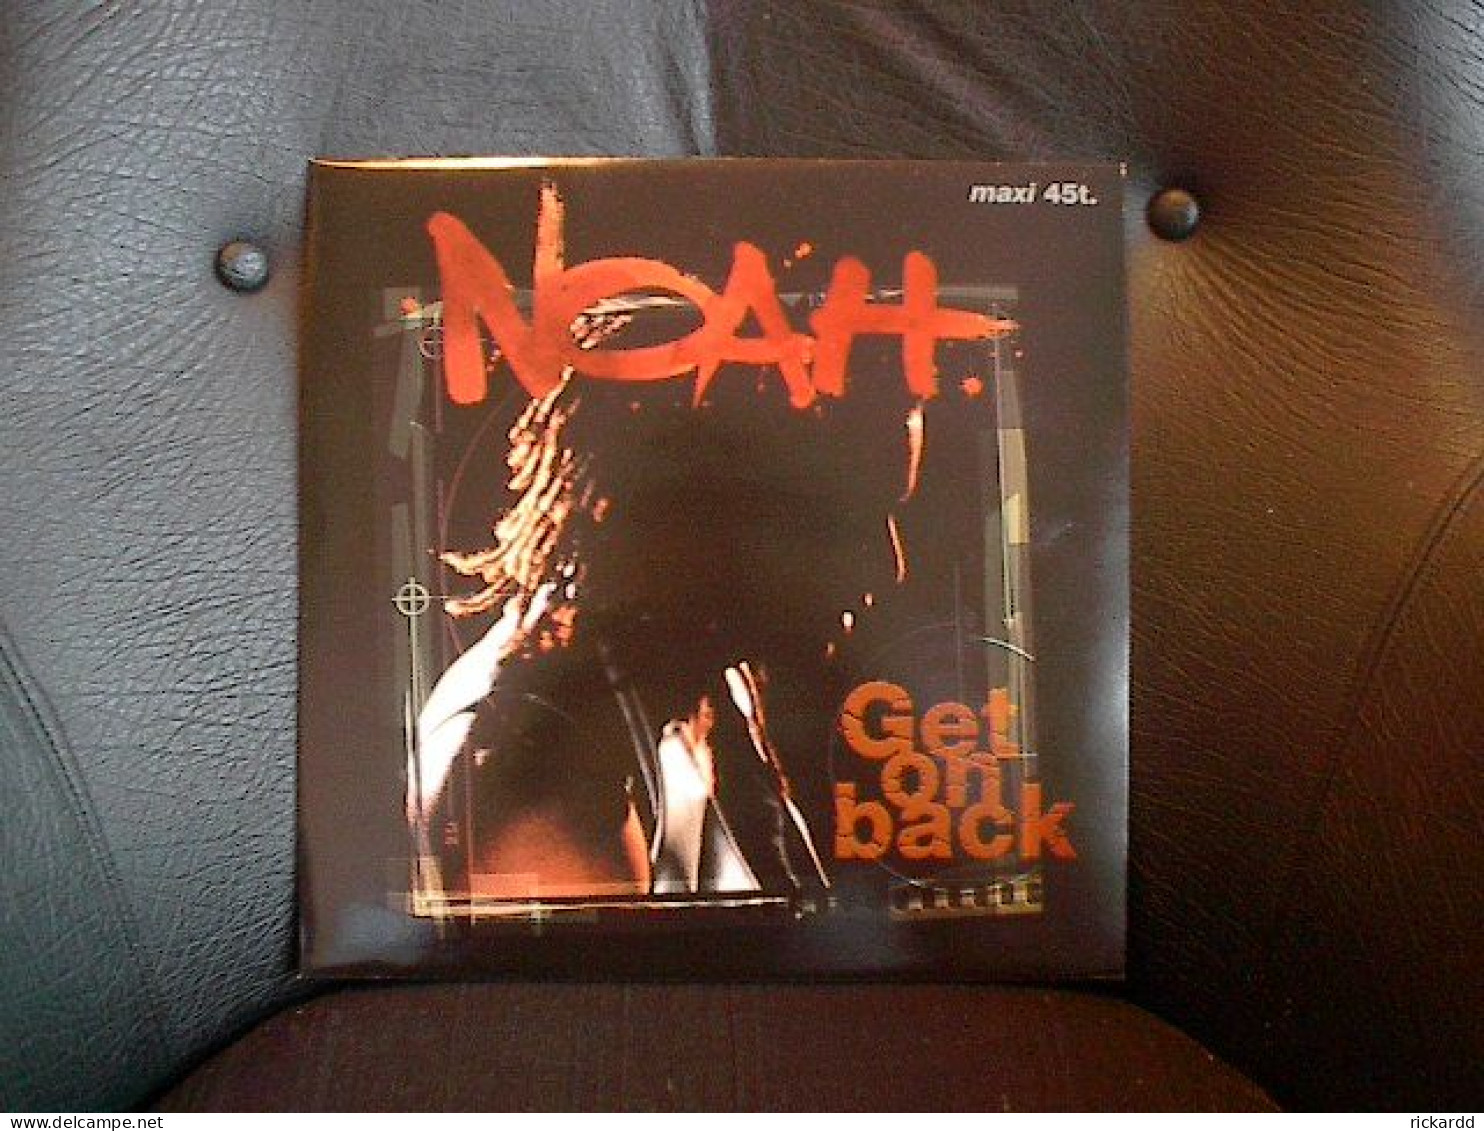 Noah - Get On Back (MAXI) Like New - 45 Rpm - Maxi-Single